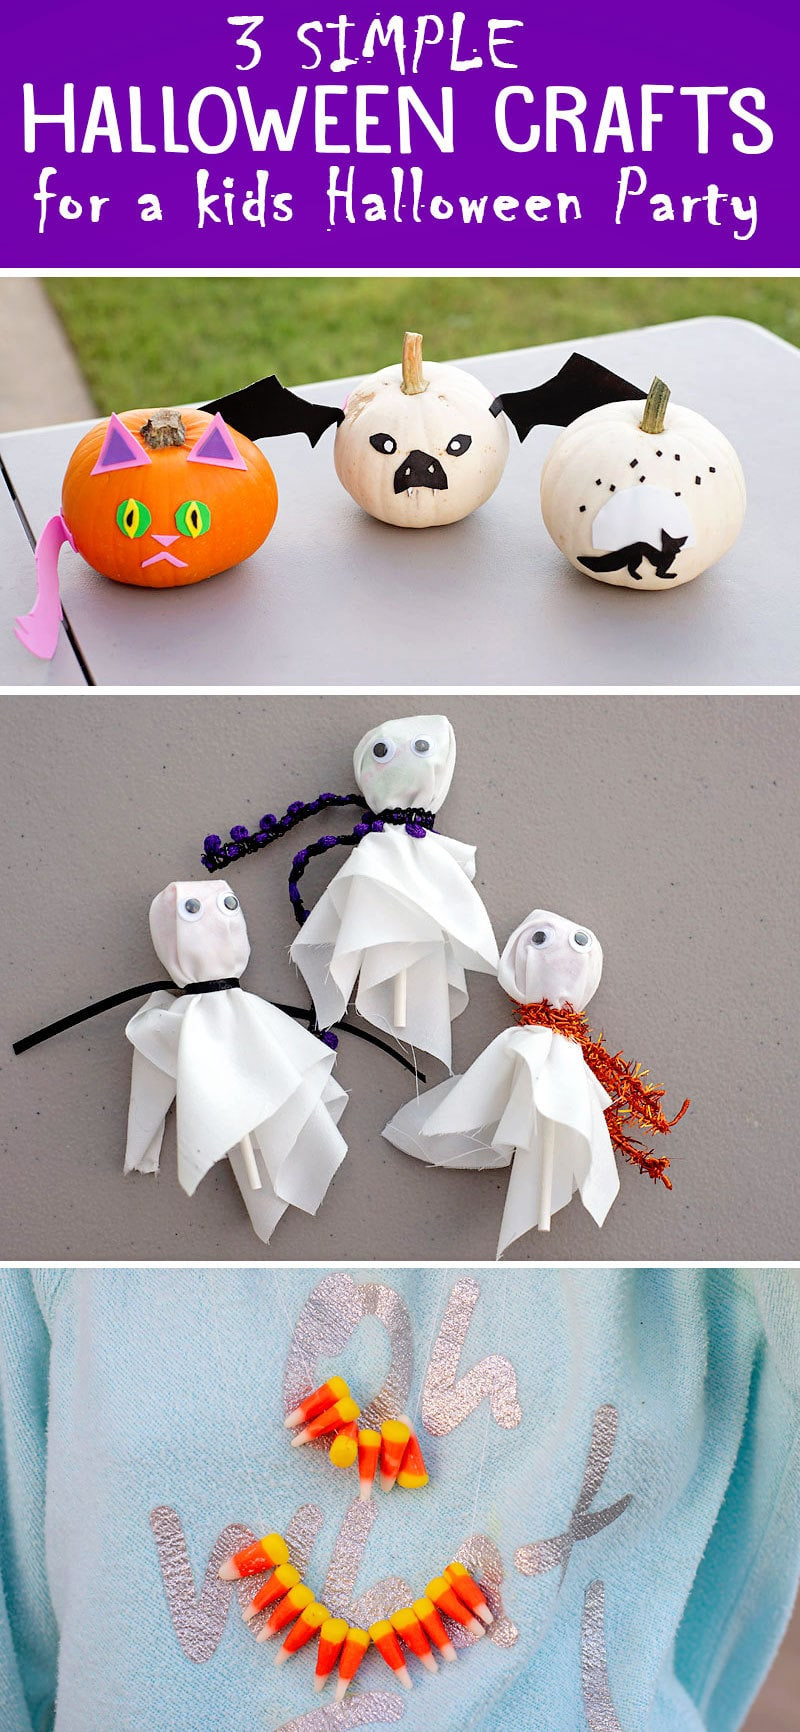 Halloween Party Craft Ideas
 Simple Halloween Party Craft Ideas